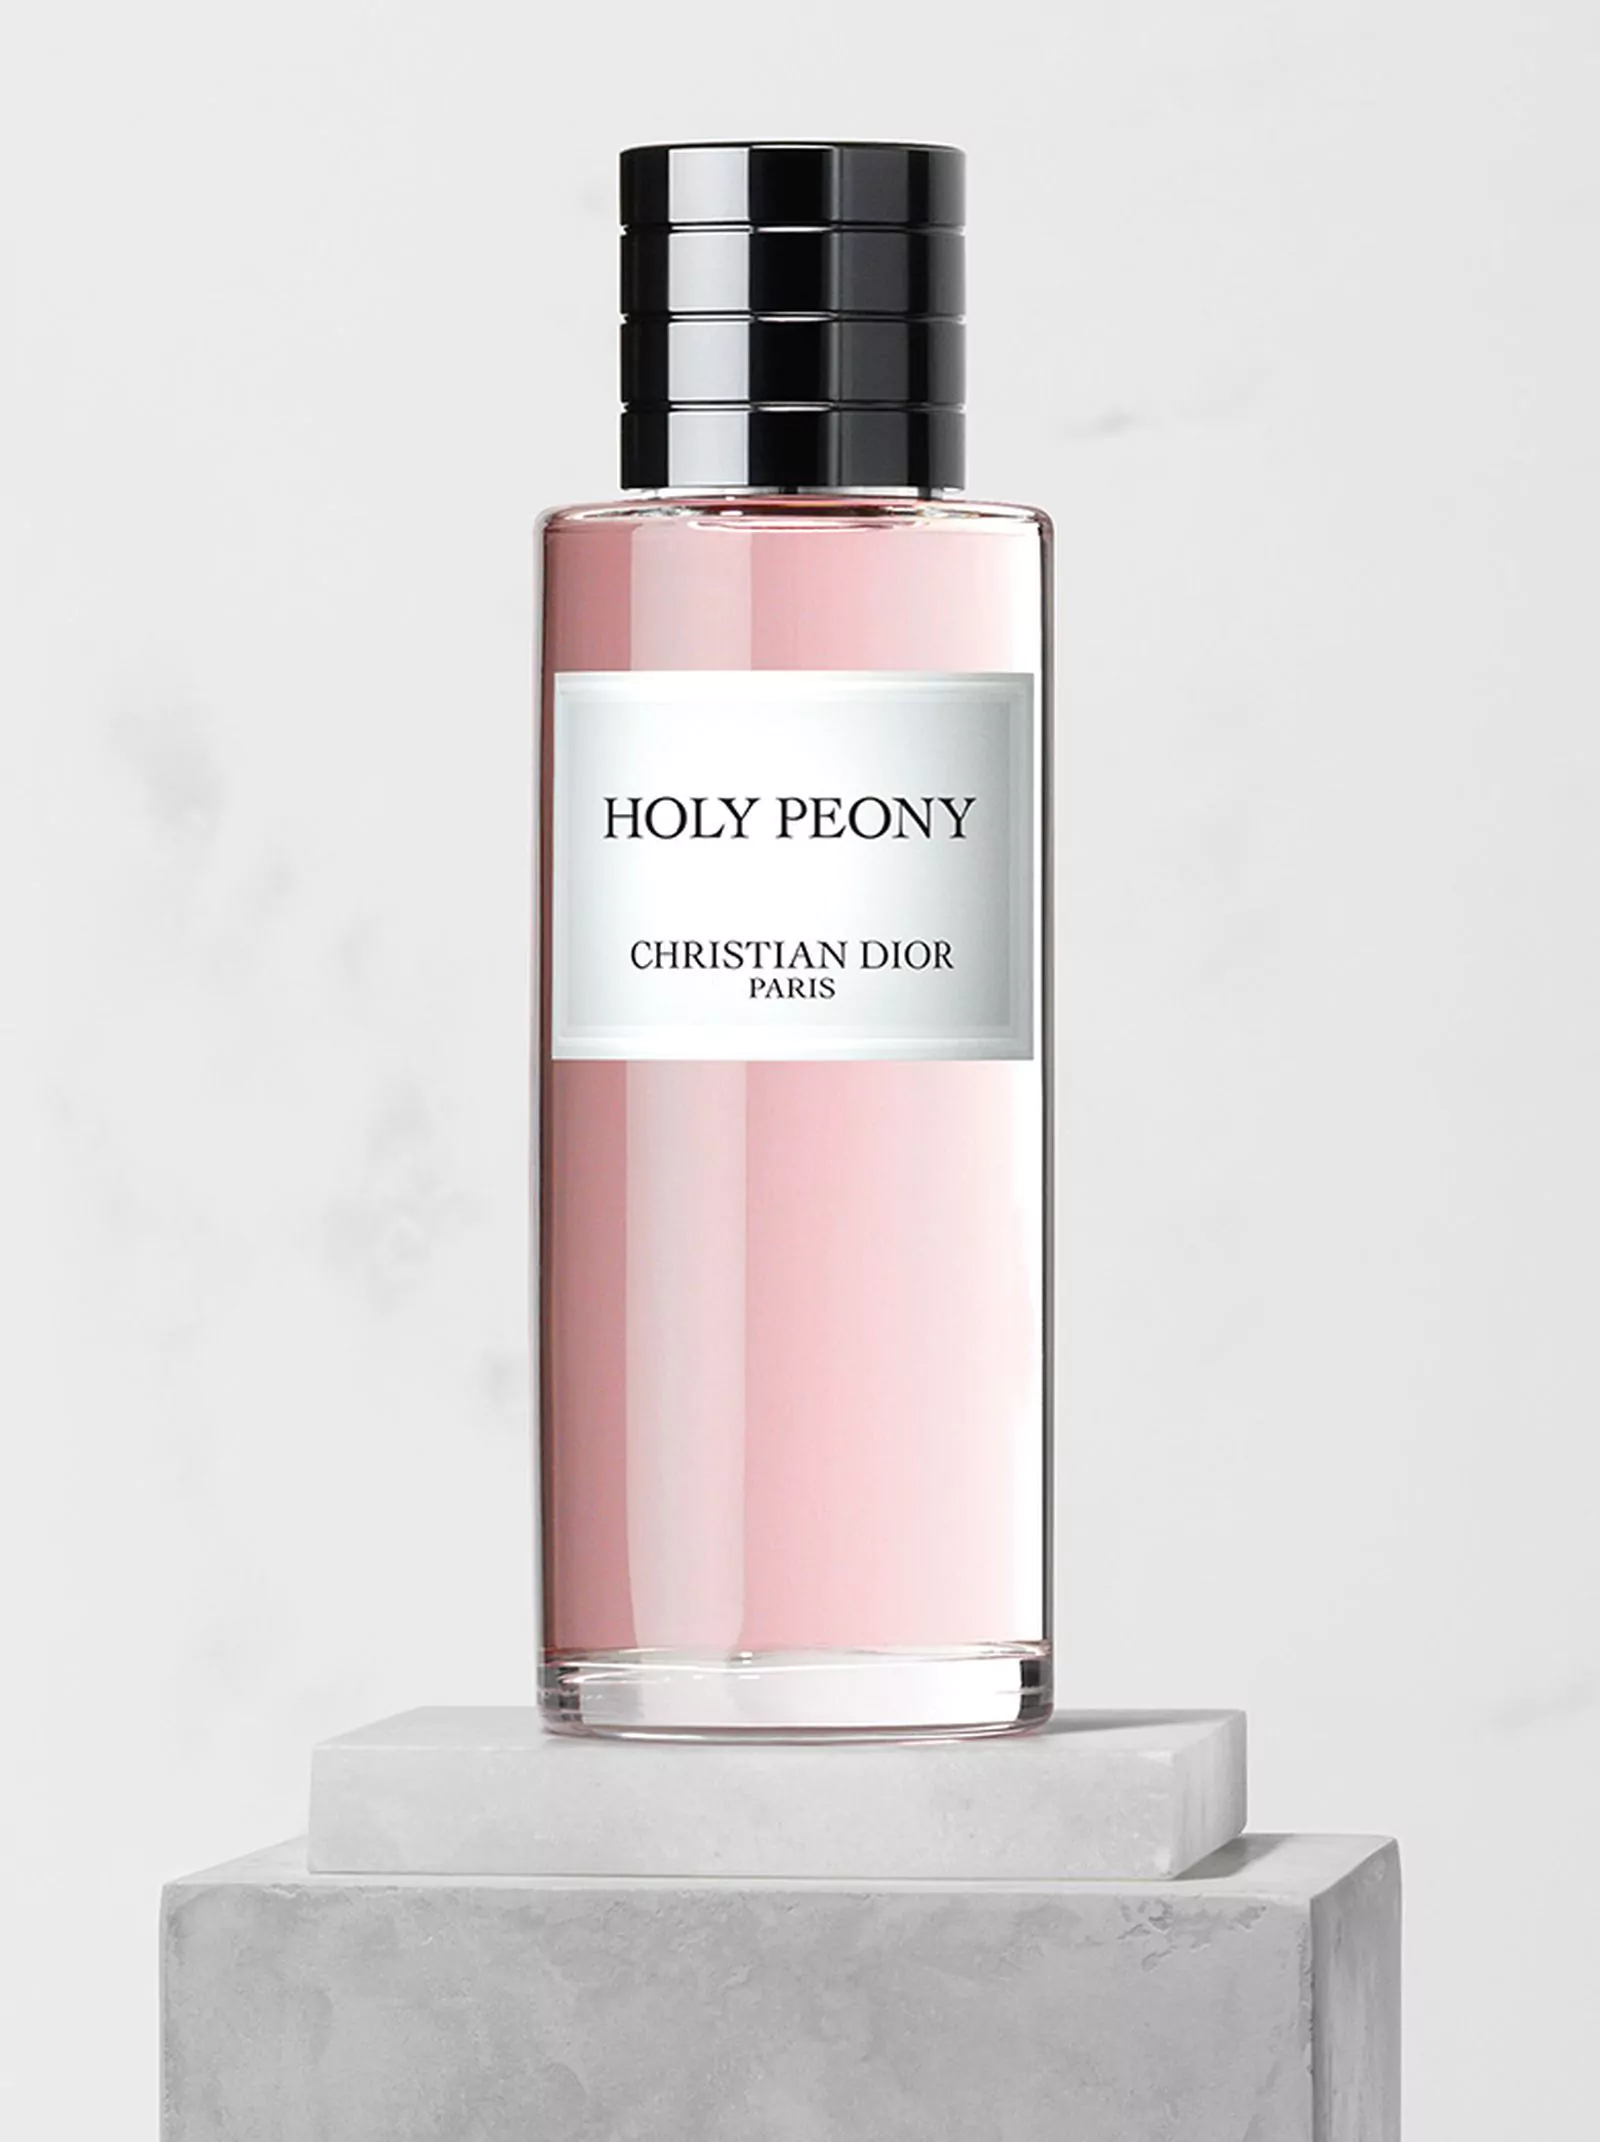 Holy Peony в коллекции Maison Christian Dior, фото 1